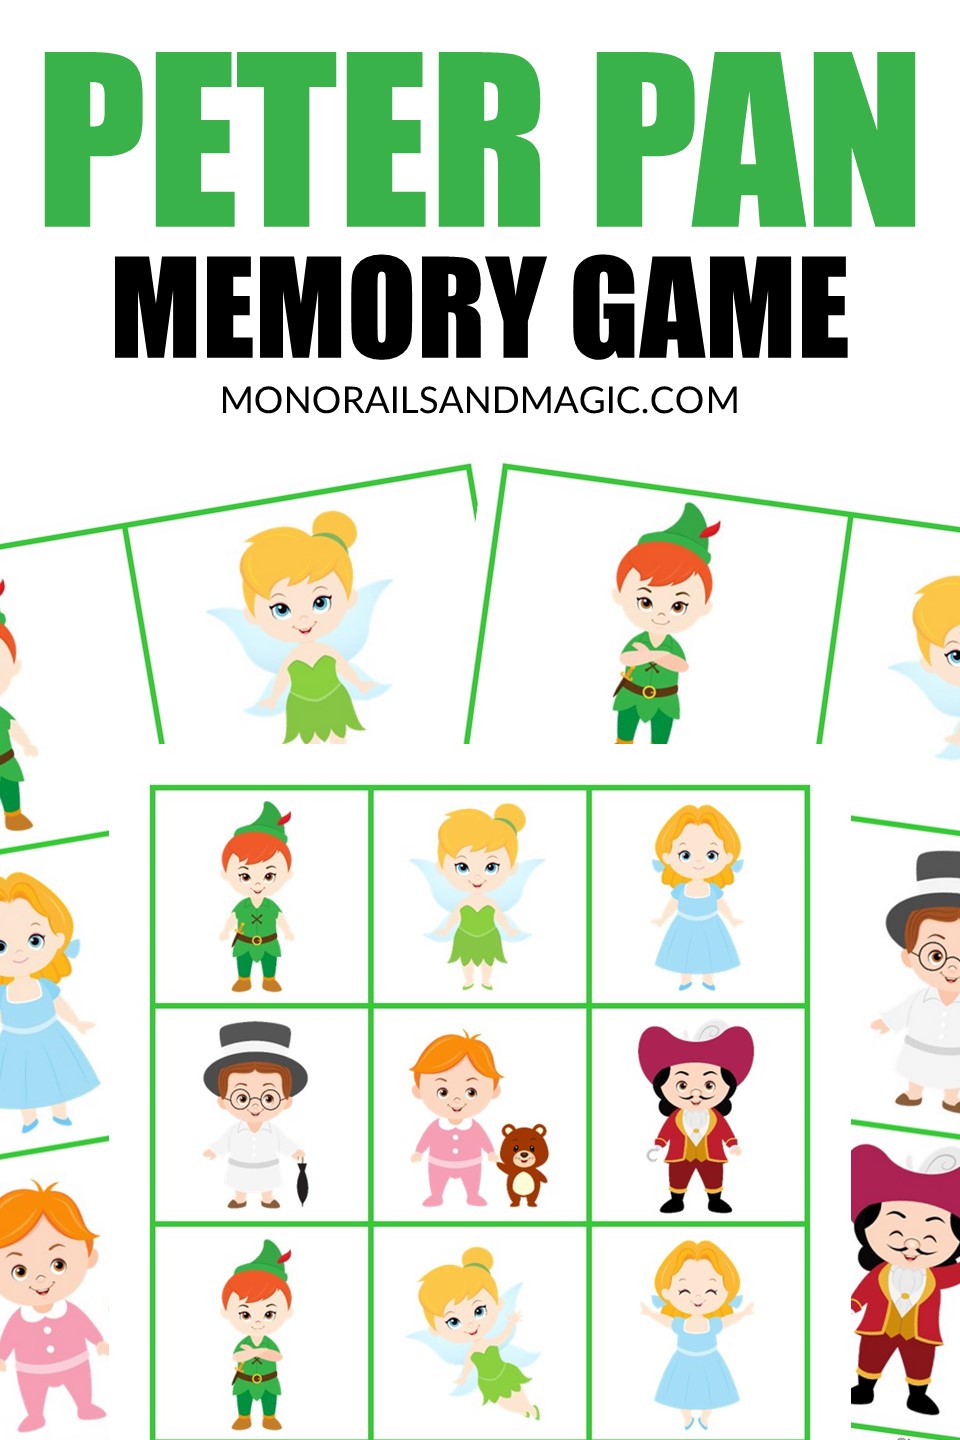 Free printable Peter Pan memory game for kids.